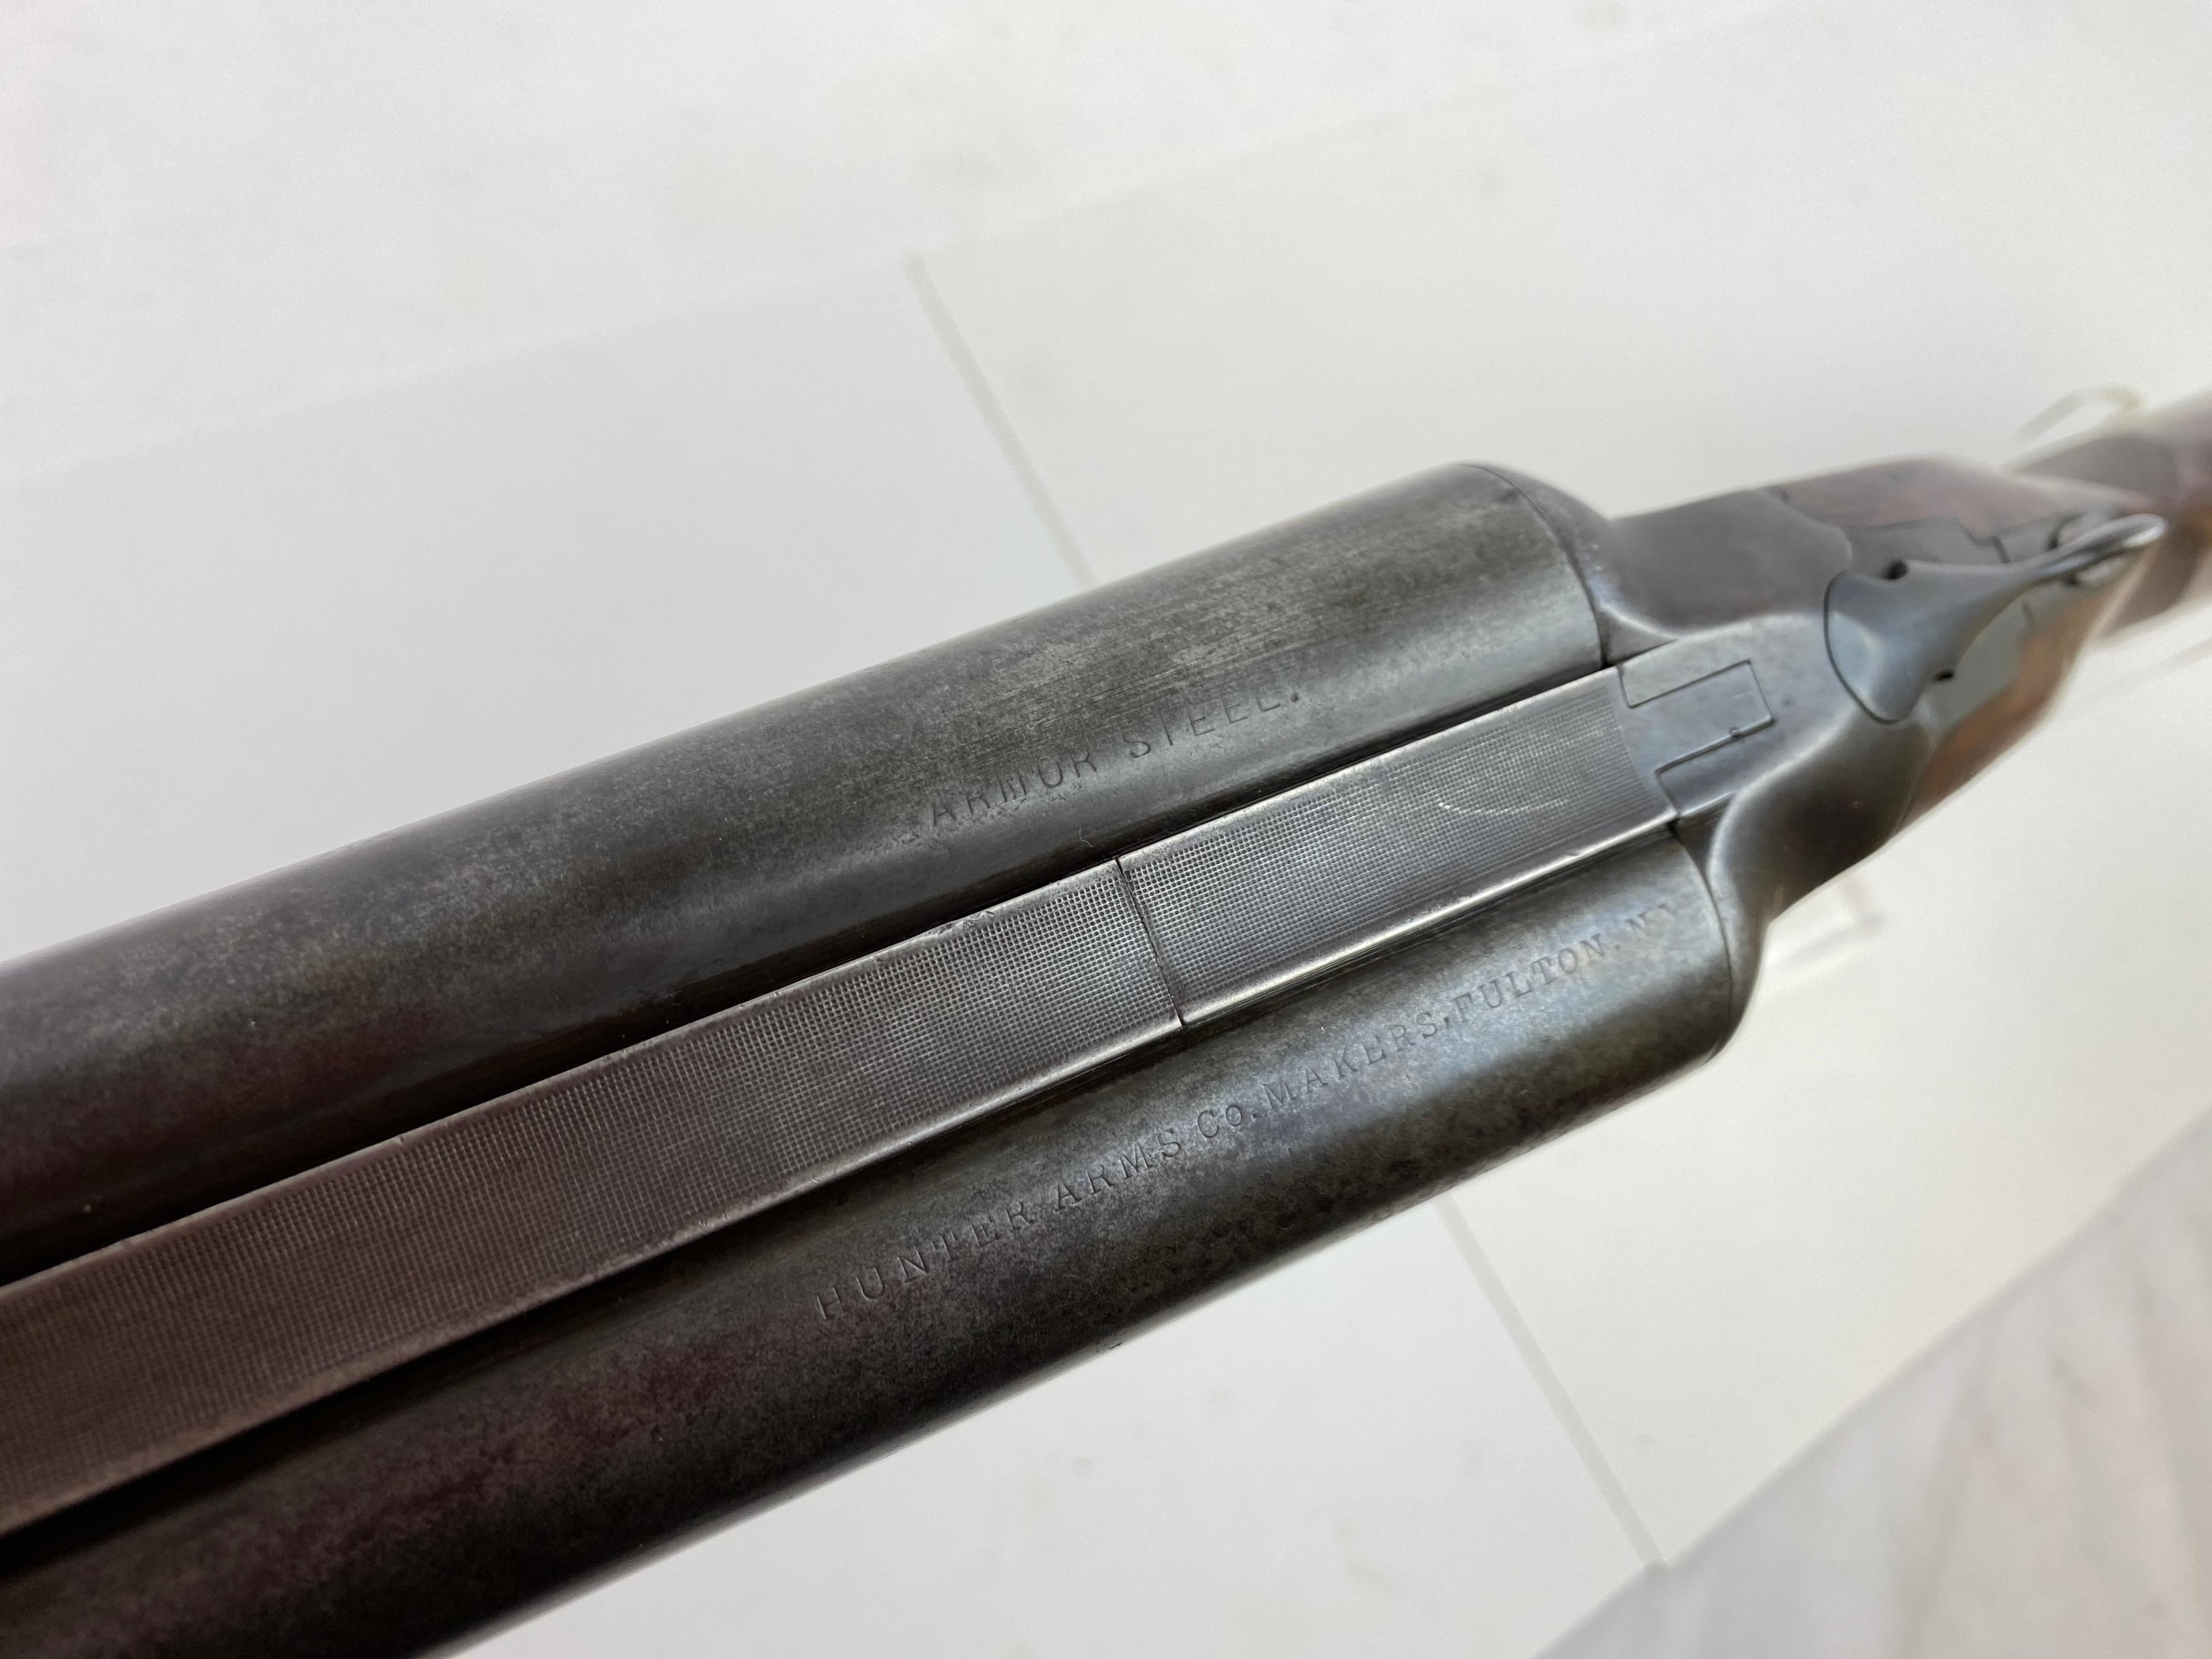 1905 L.C. Smith "00" Grade 12 GA. SXS Double Barrel Hammerless Shotgun